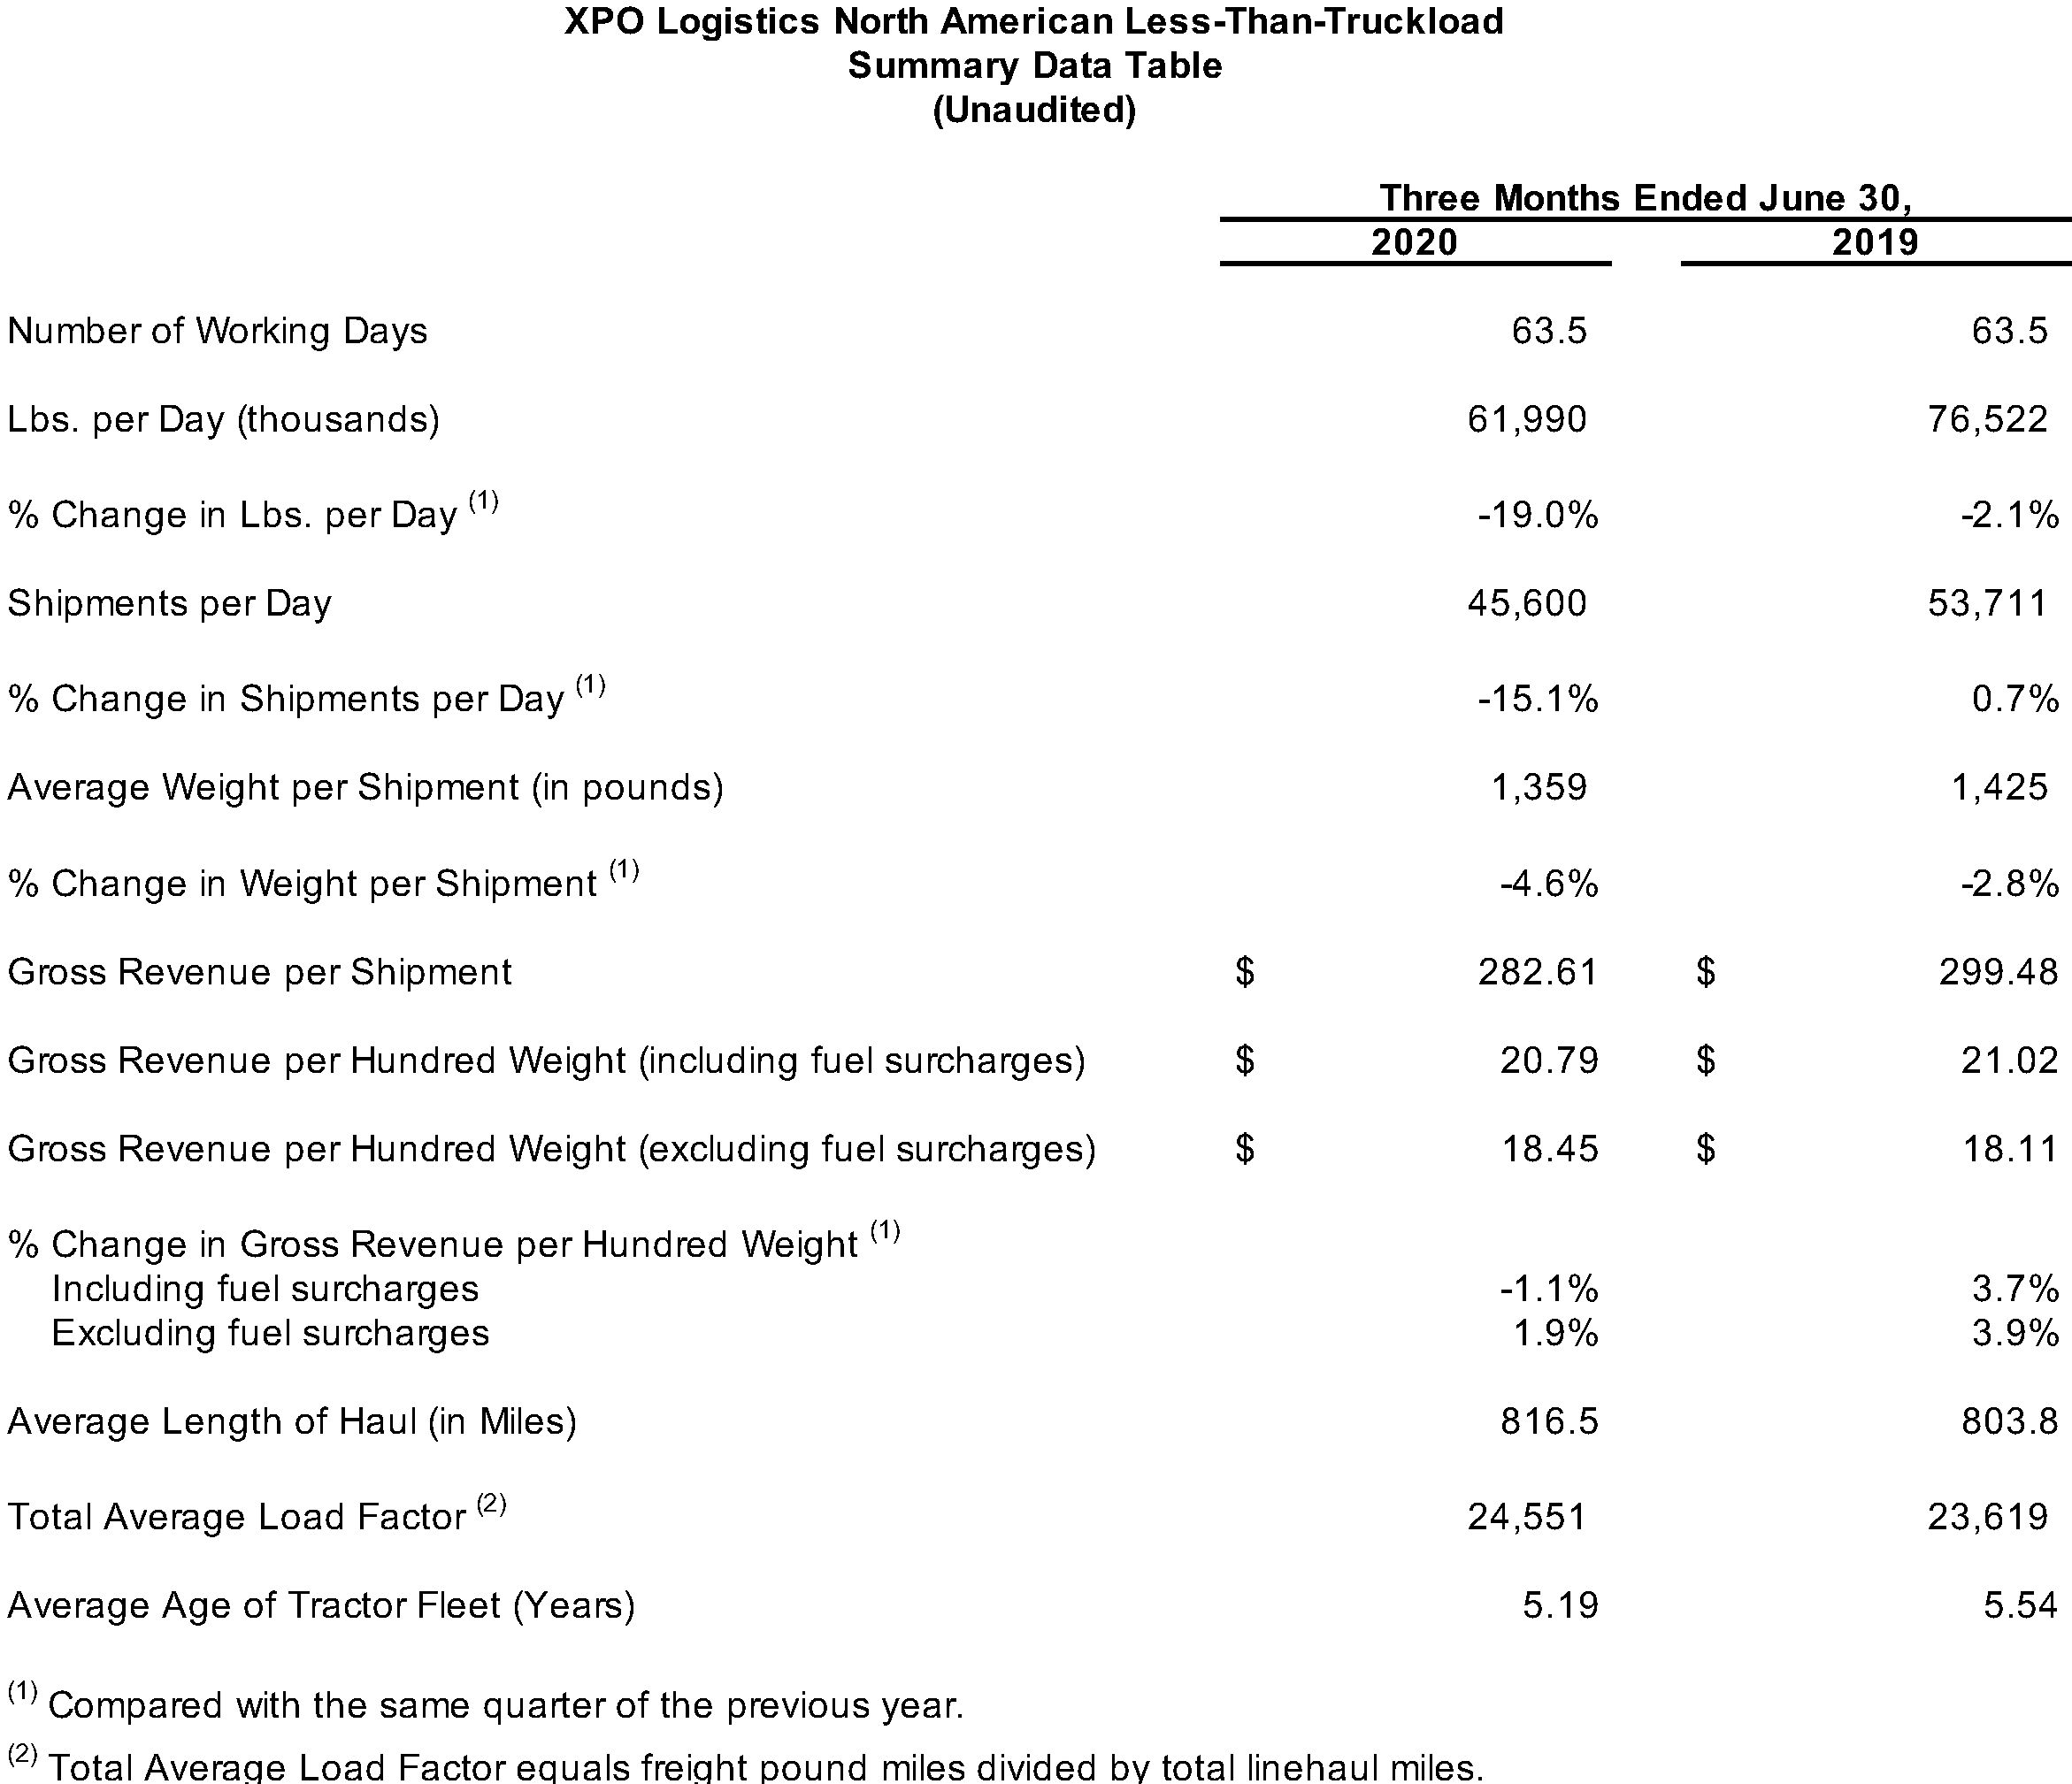 North American LTL Summary Data Table